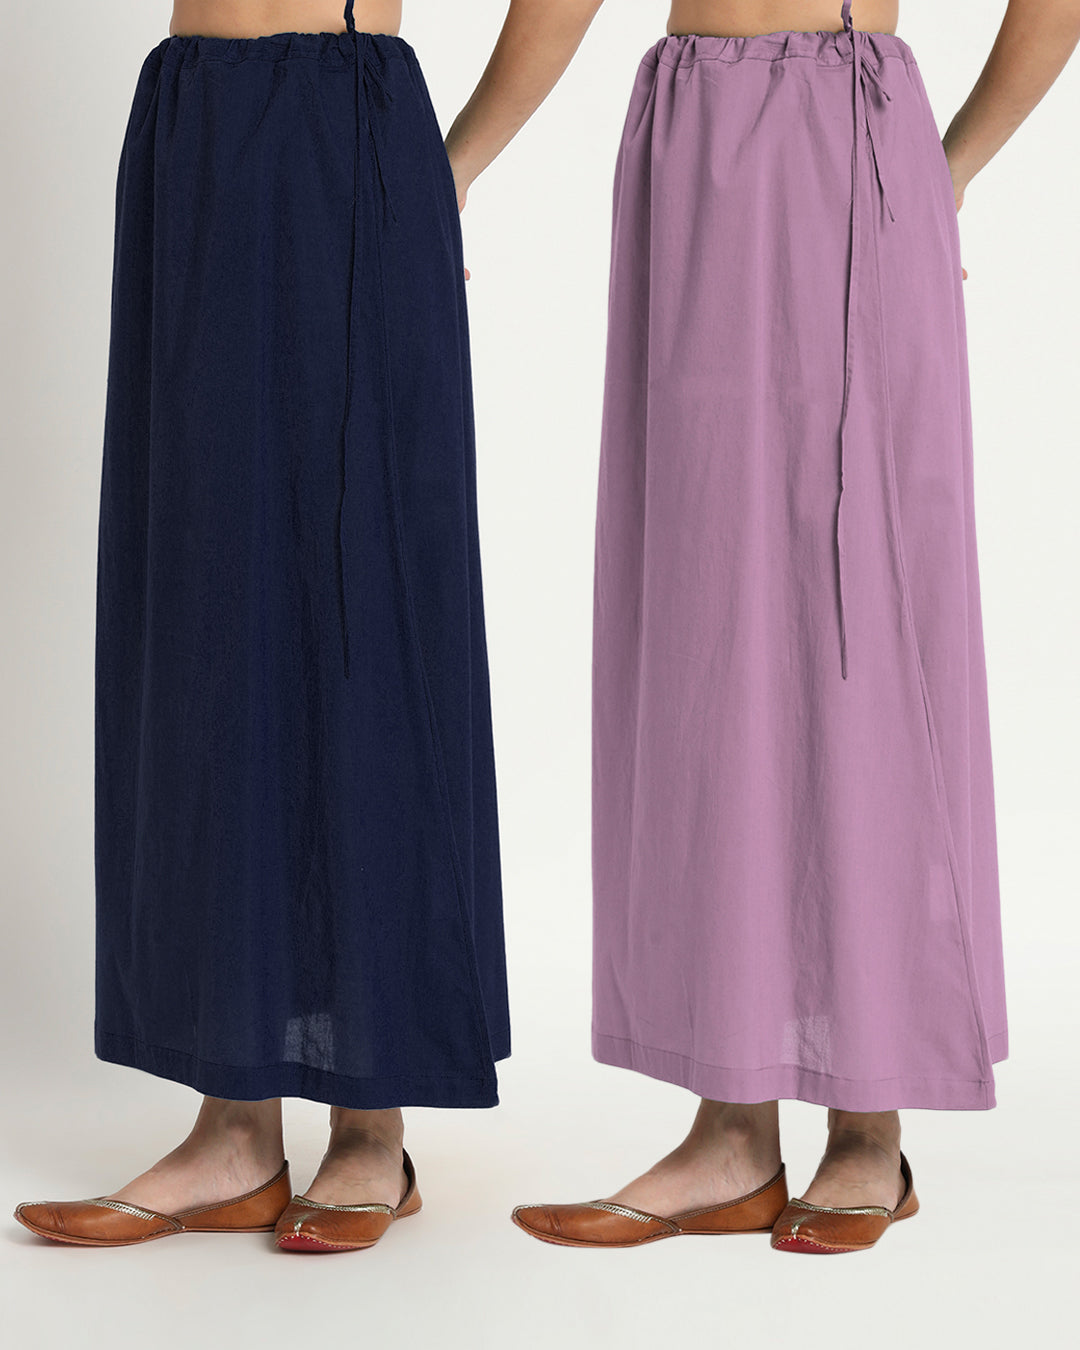 Combo: Midnight Blue & Iris Pink Peekaboo Petticoat- Set of 2